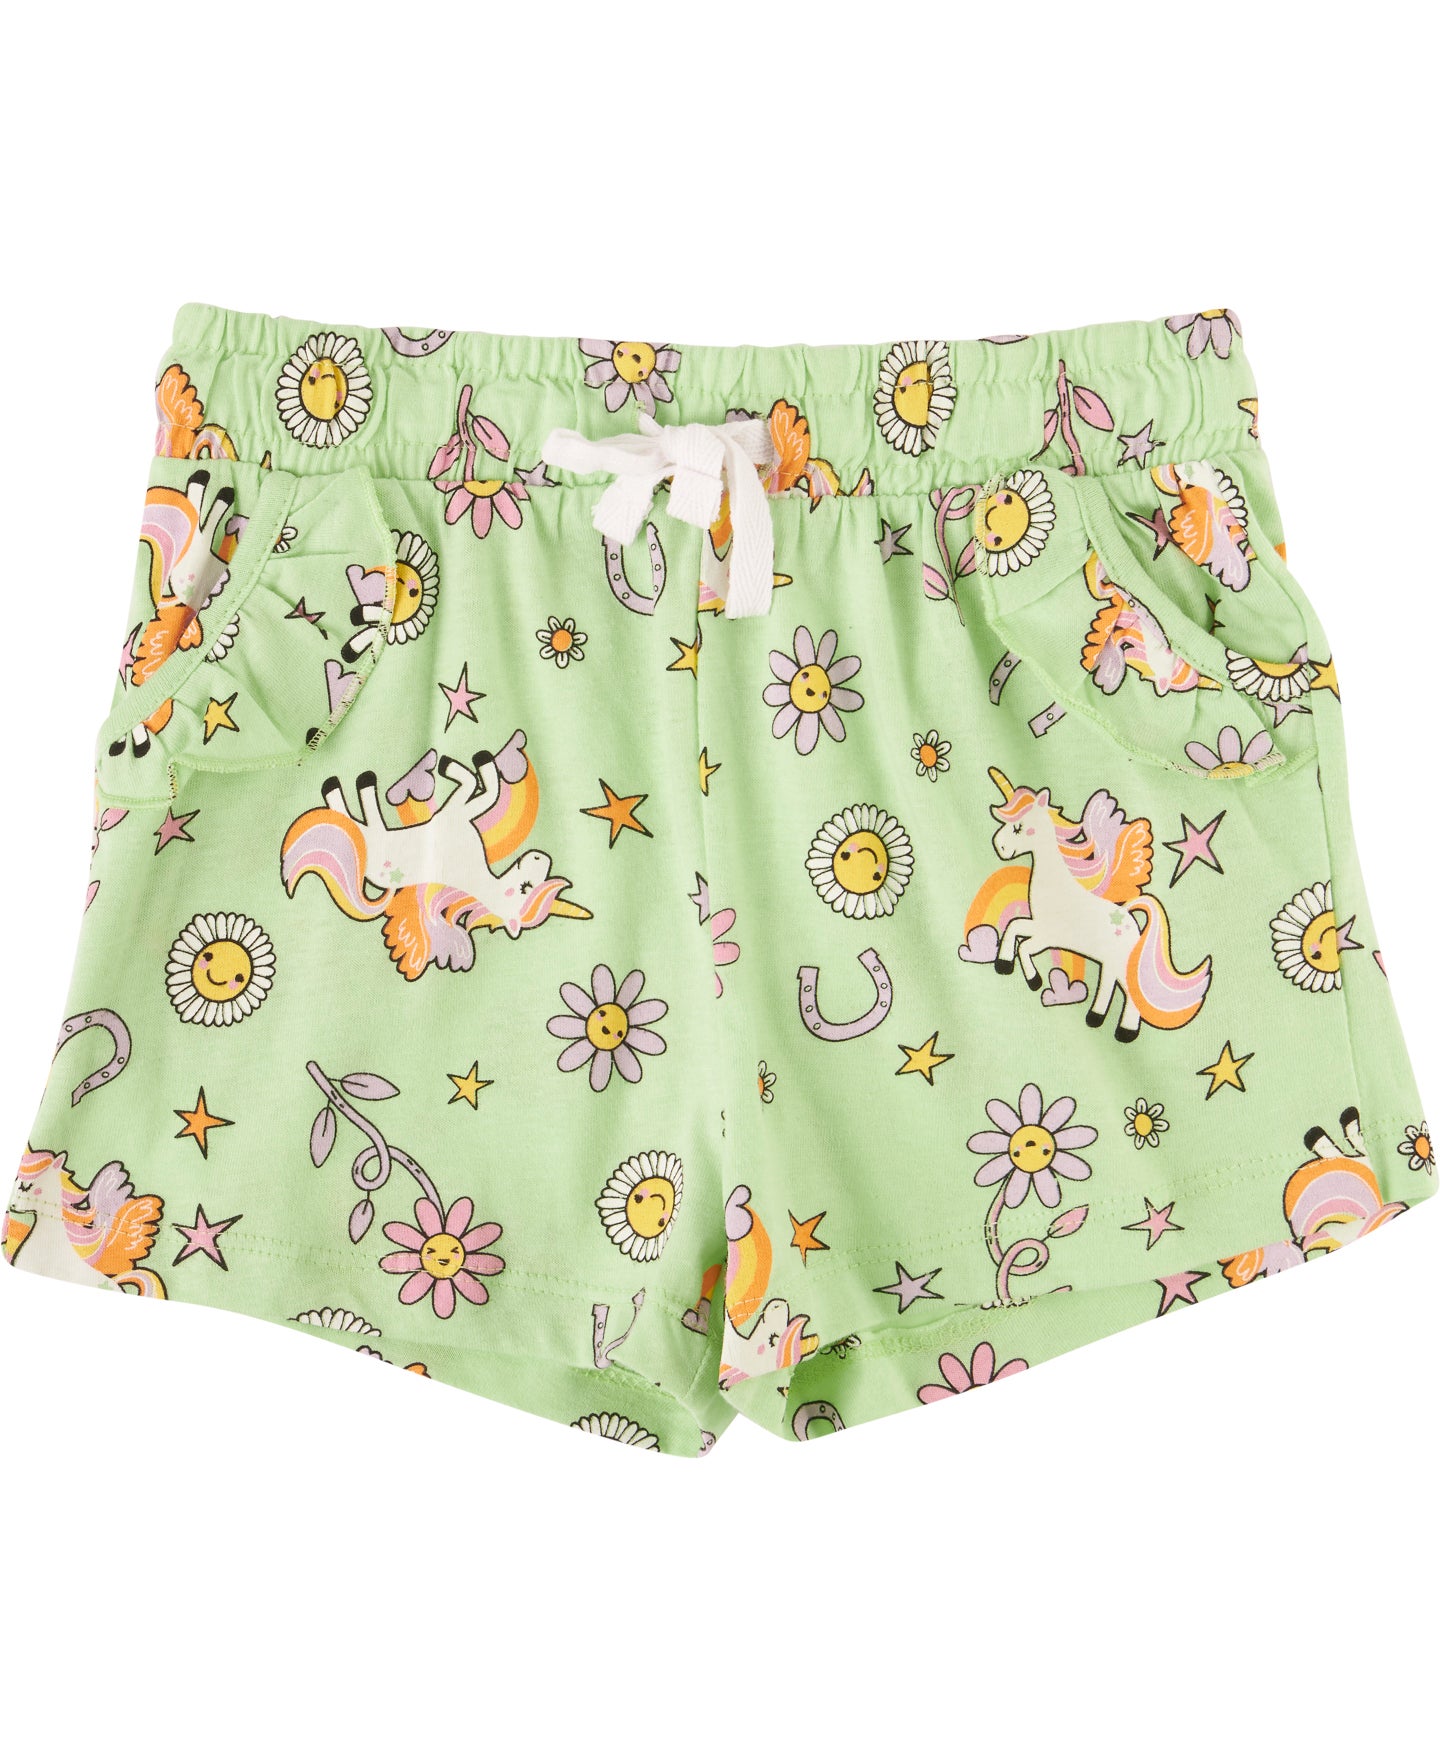 Organic cotton pyjama shorts in green Pixie print